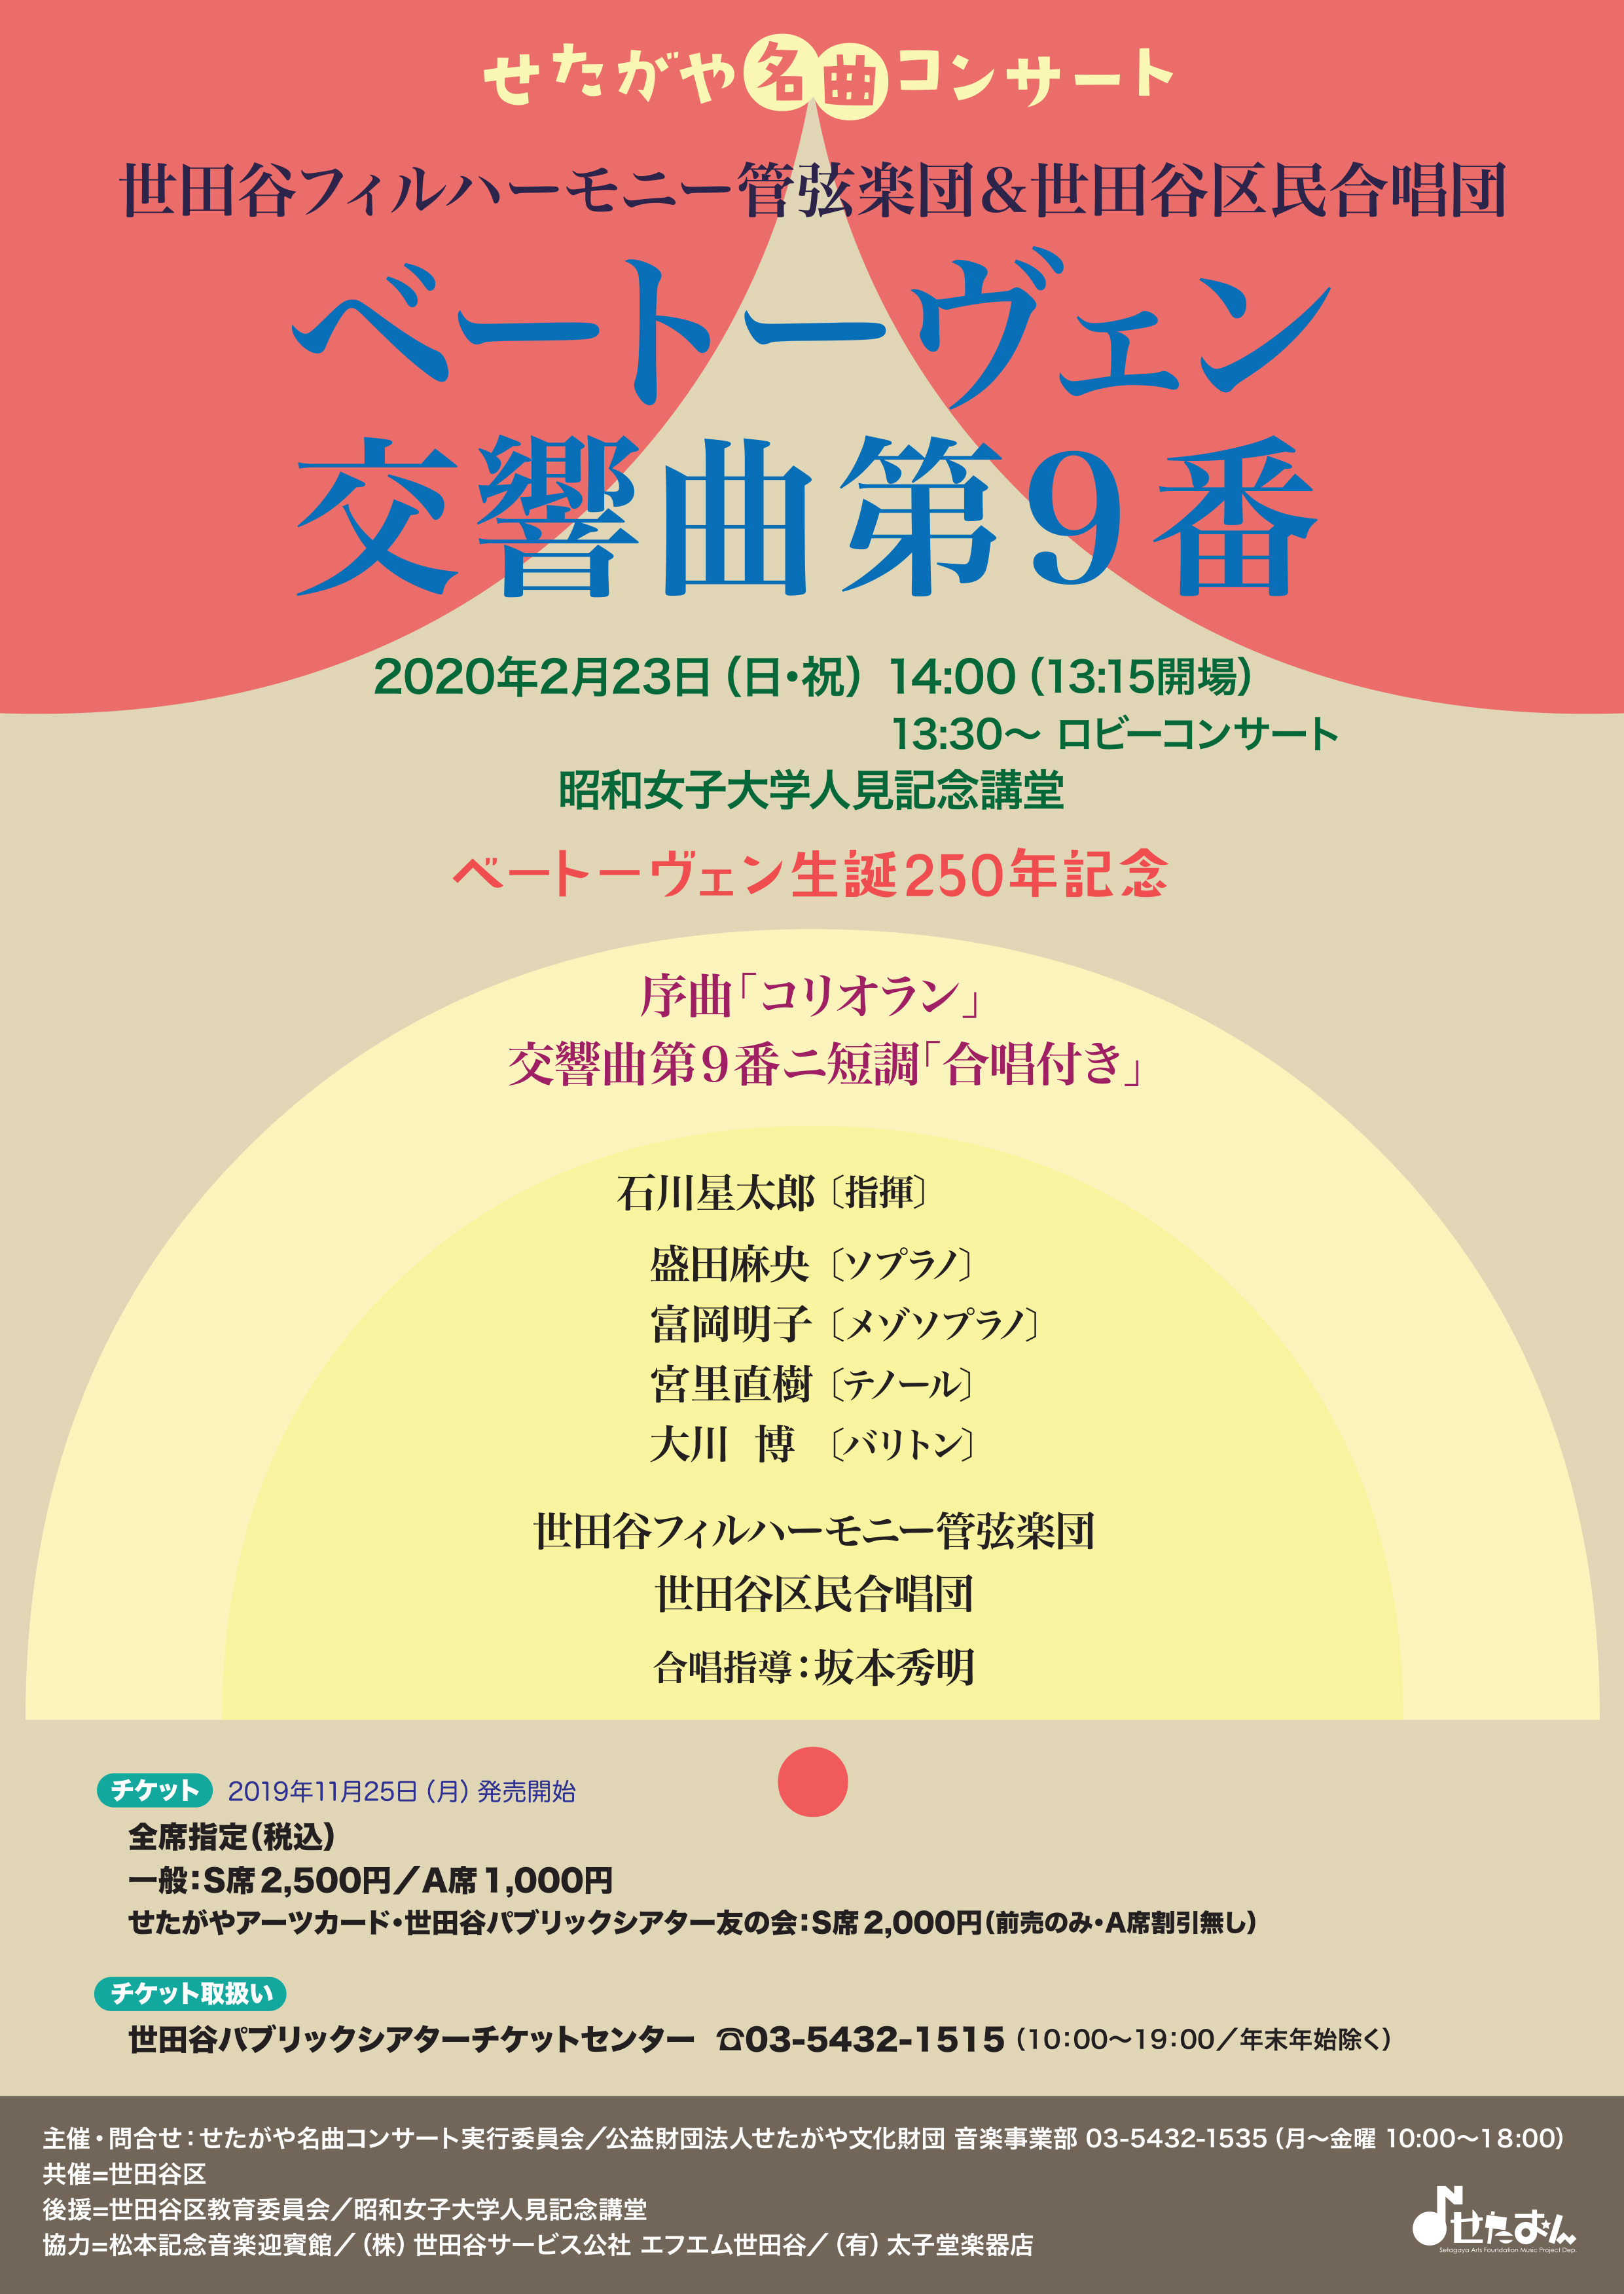 Setagaya Concert of Famous MusicBeethoven's Symphony No. 9 | EVENT |  “Seta-on” Setagaya Arts Foundation Music Project Department